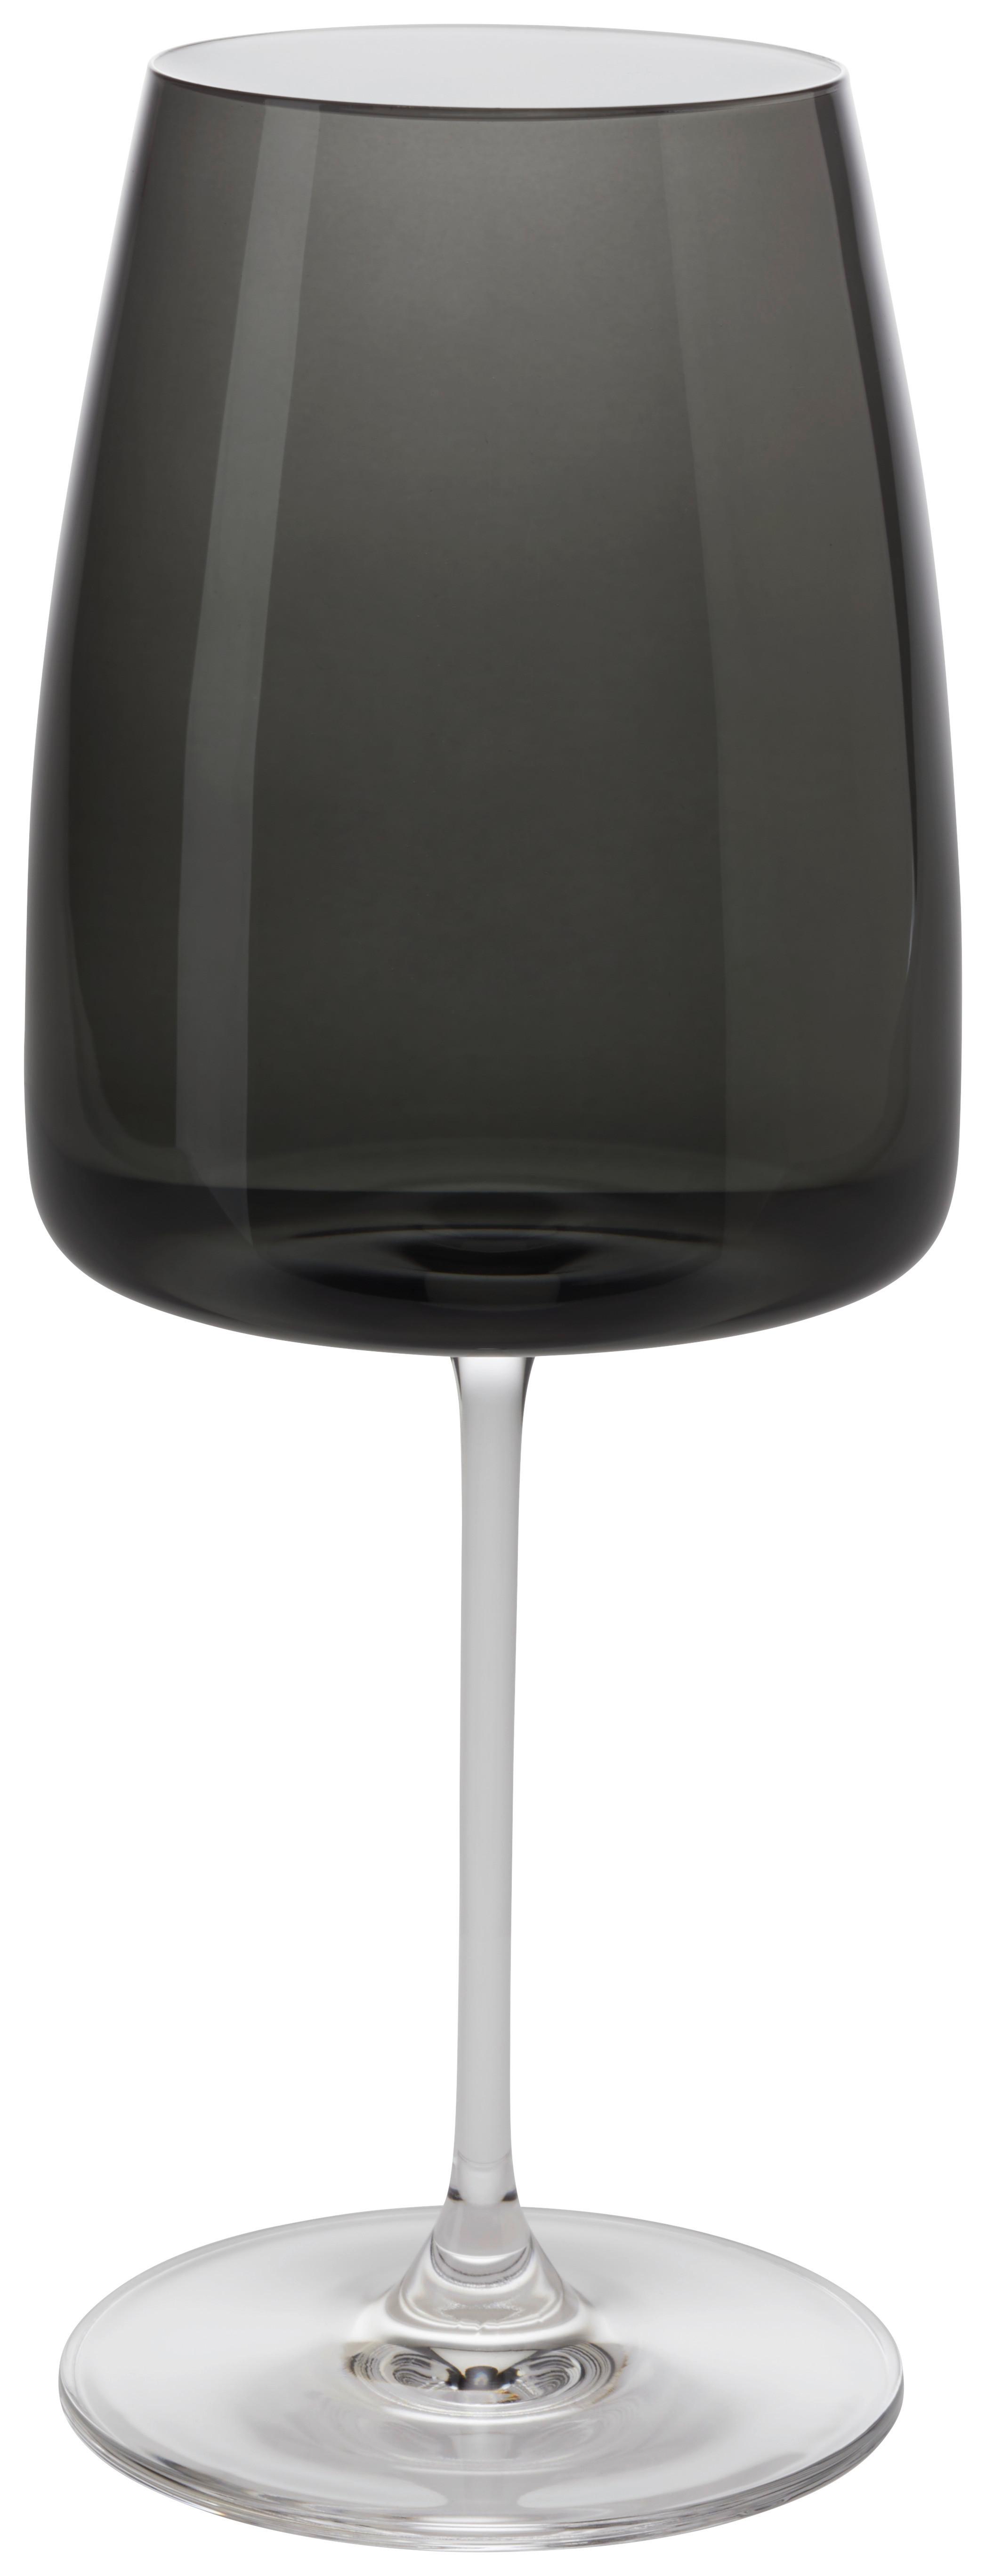 Bordeaux Pohár Nicki - Fekete, modern, Üveg (9,4/24cm) - Premium Living